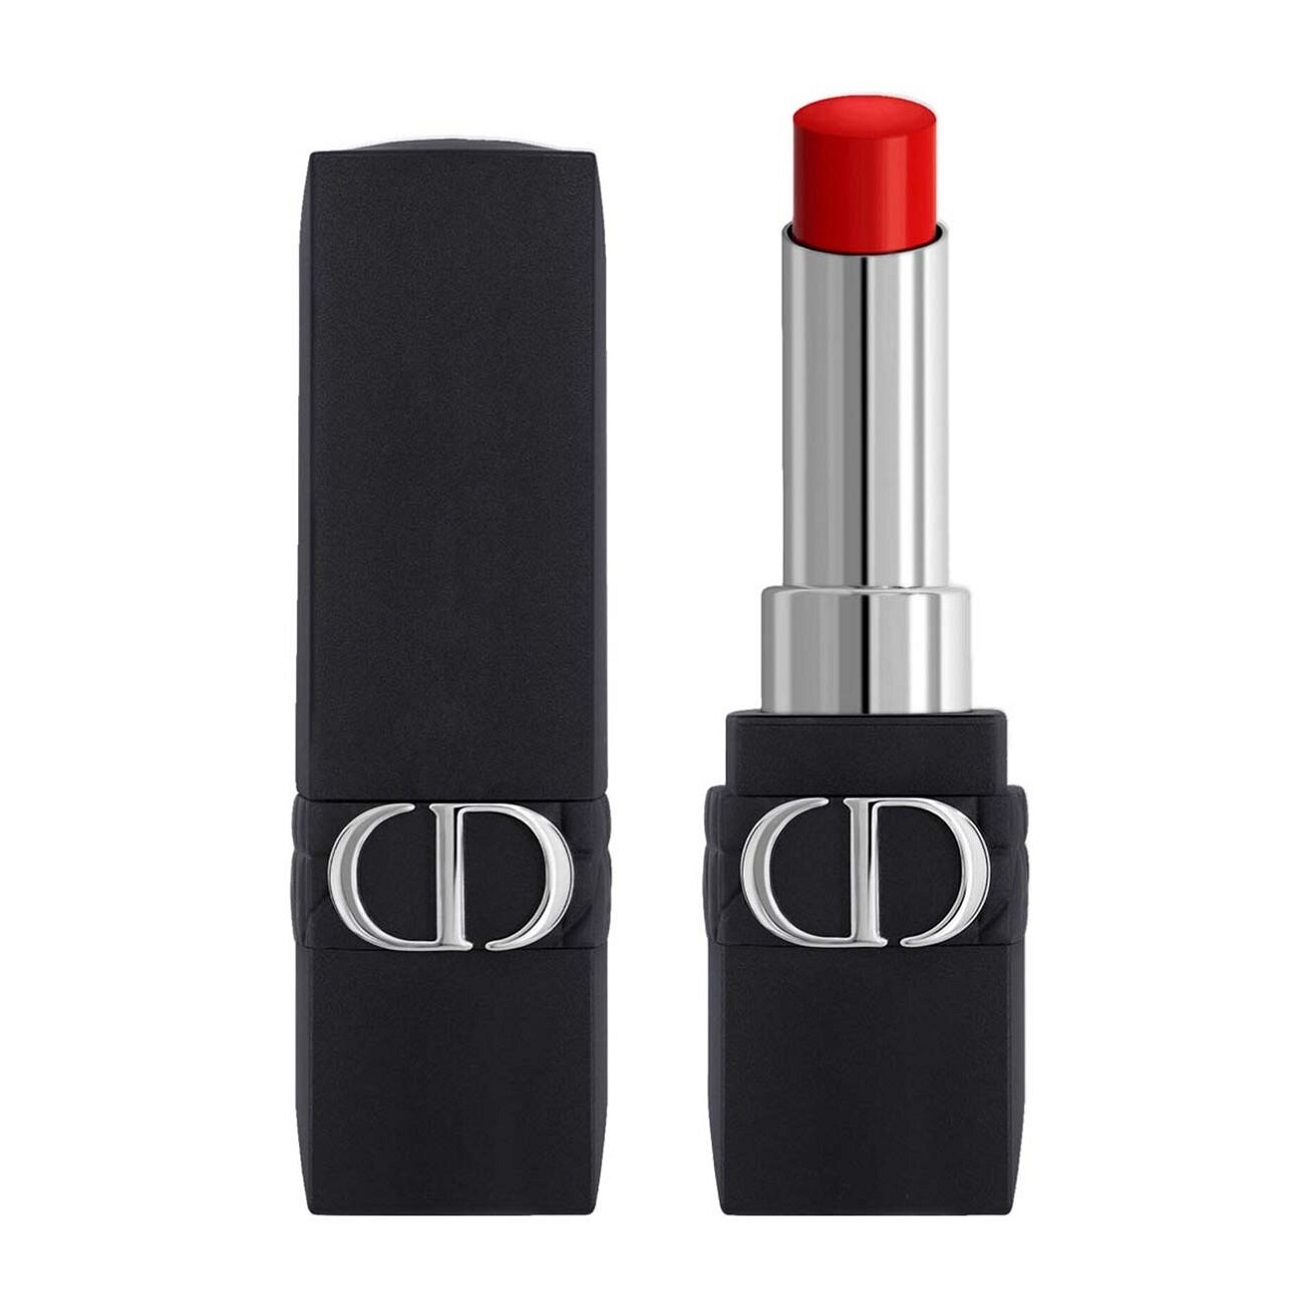 Dior Capture Totale Advanced Dream Skin Refill 50ml  BestPricegr